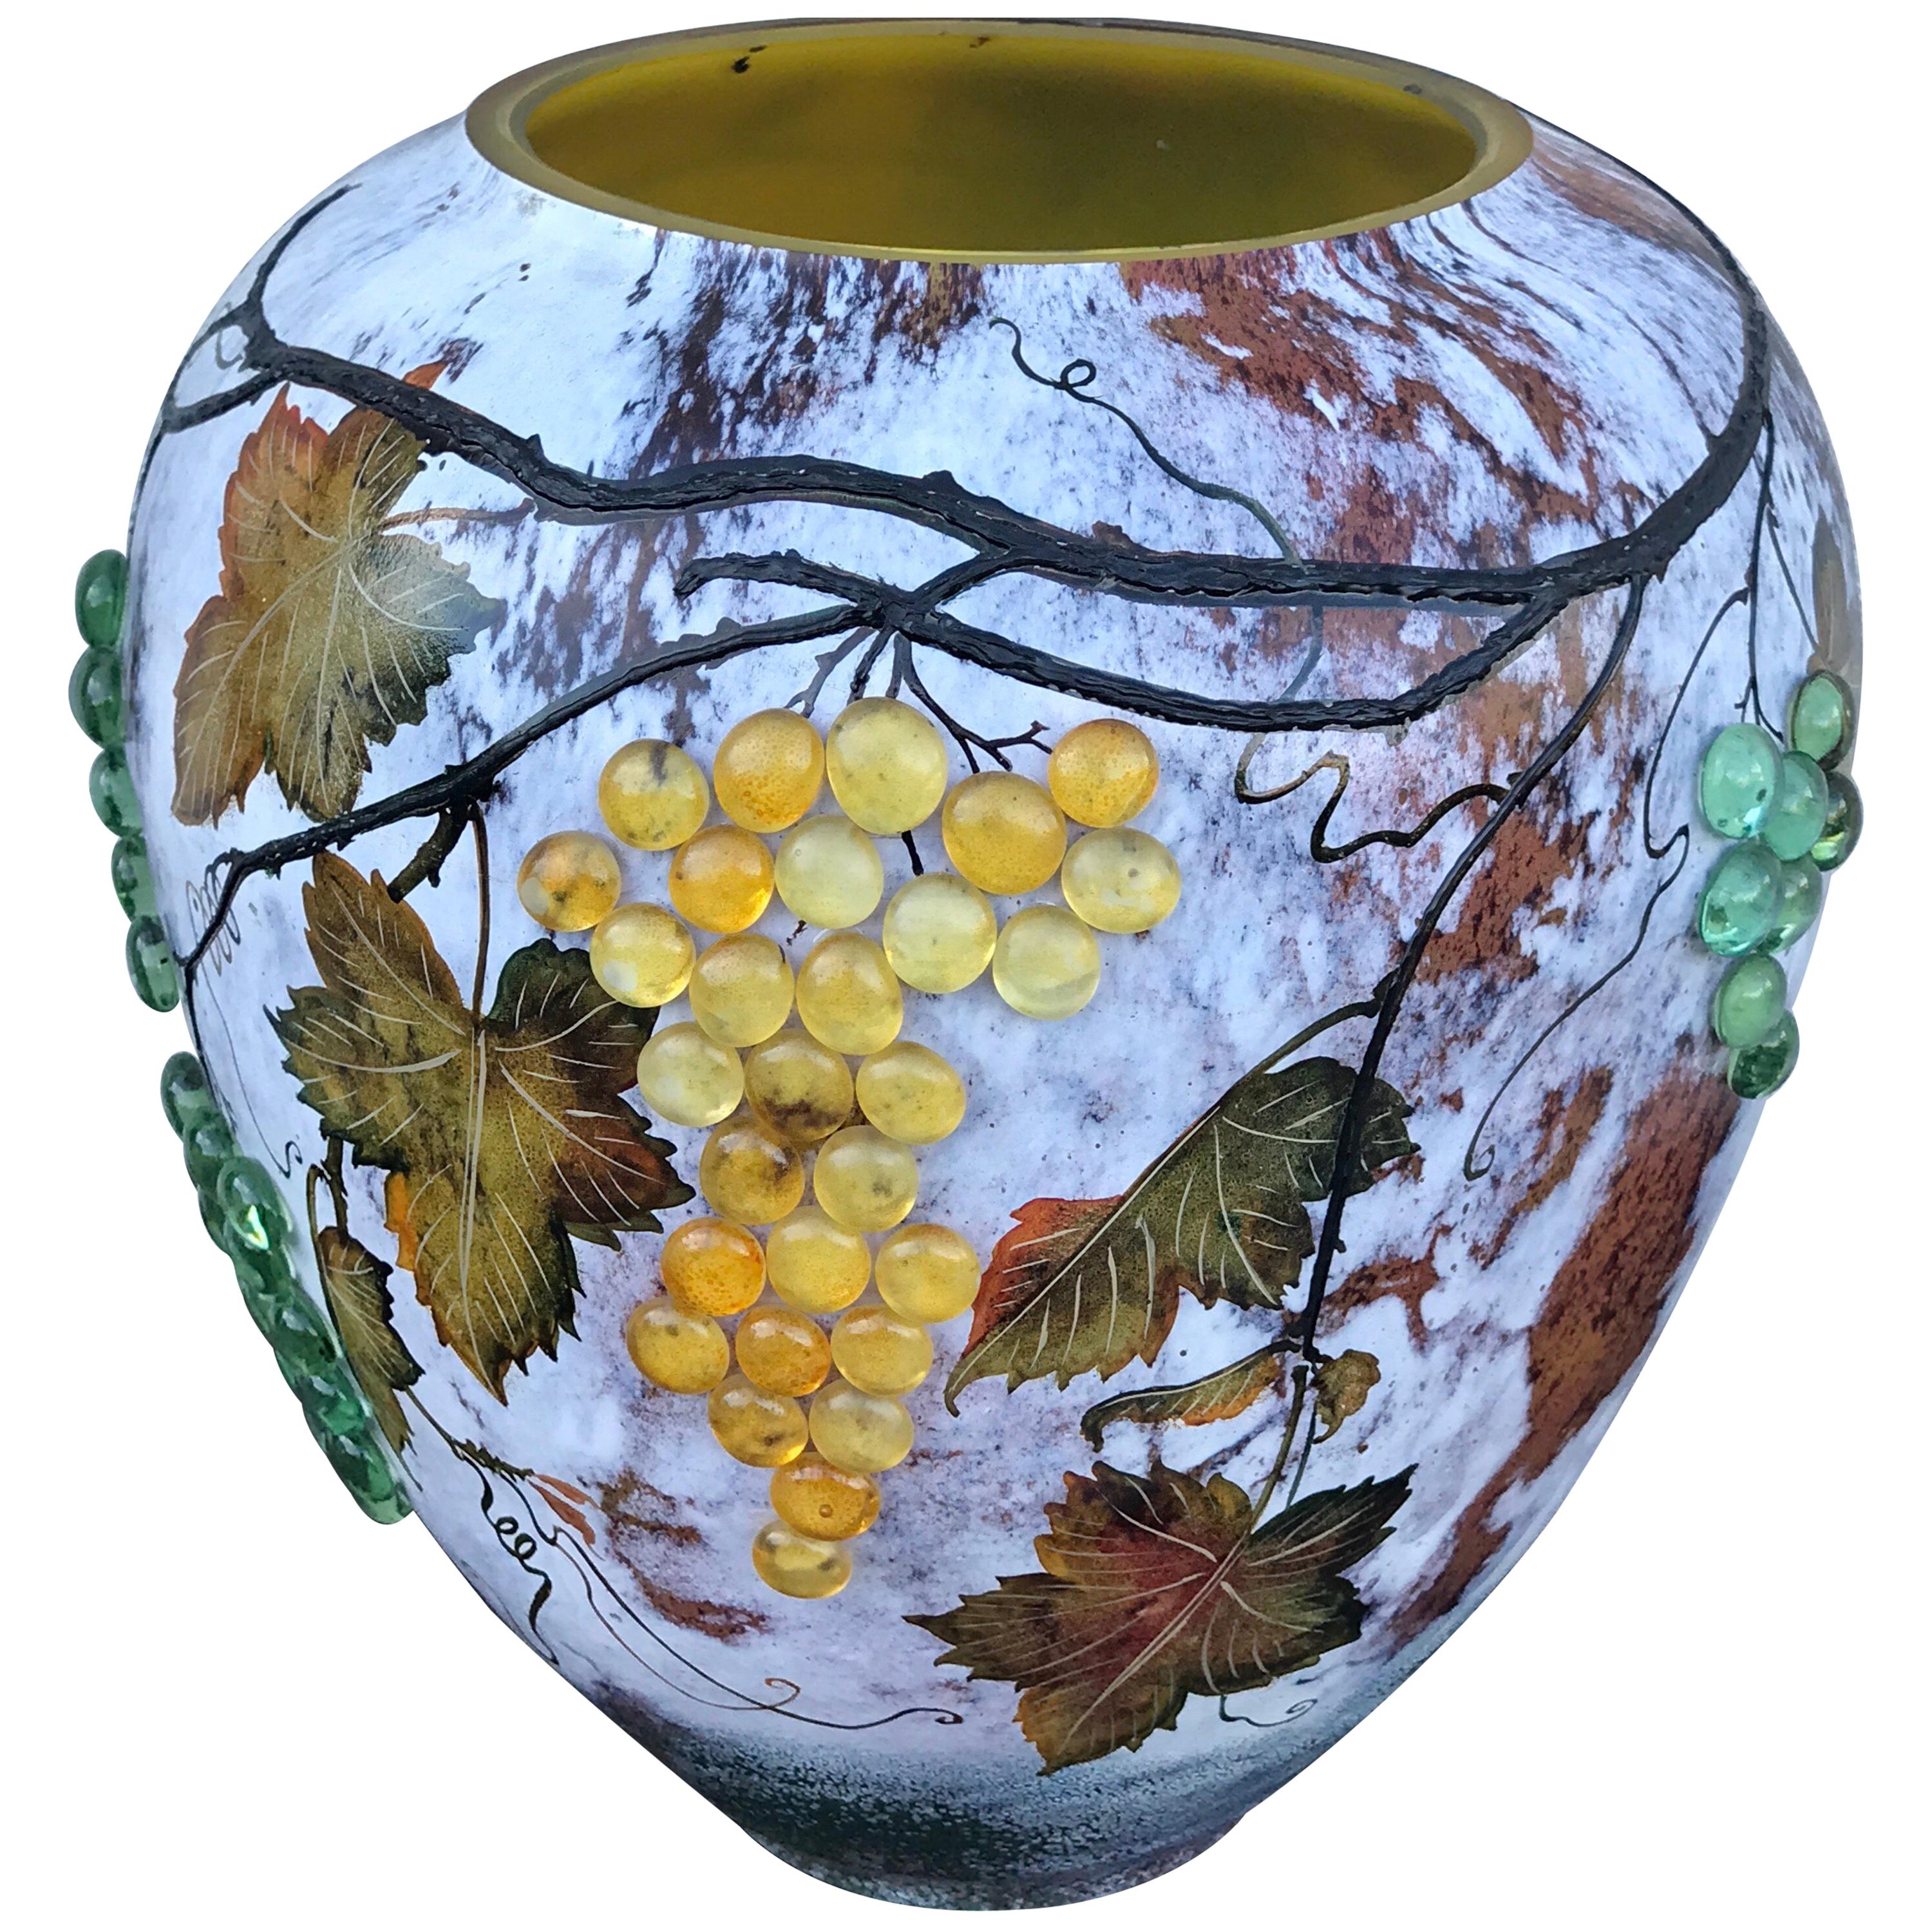 Grand vase en verre d'art avec raisins appliqués, d'après Daum Nancy